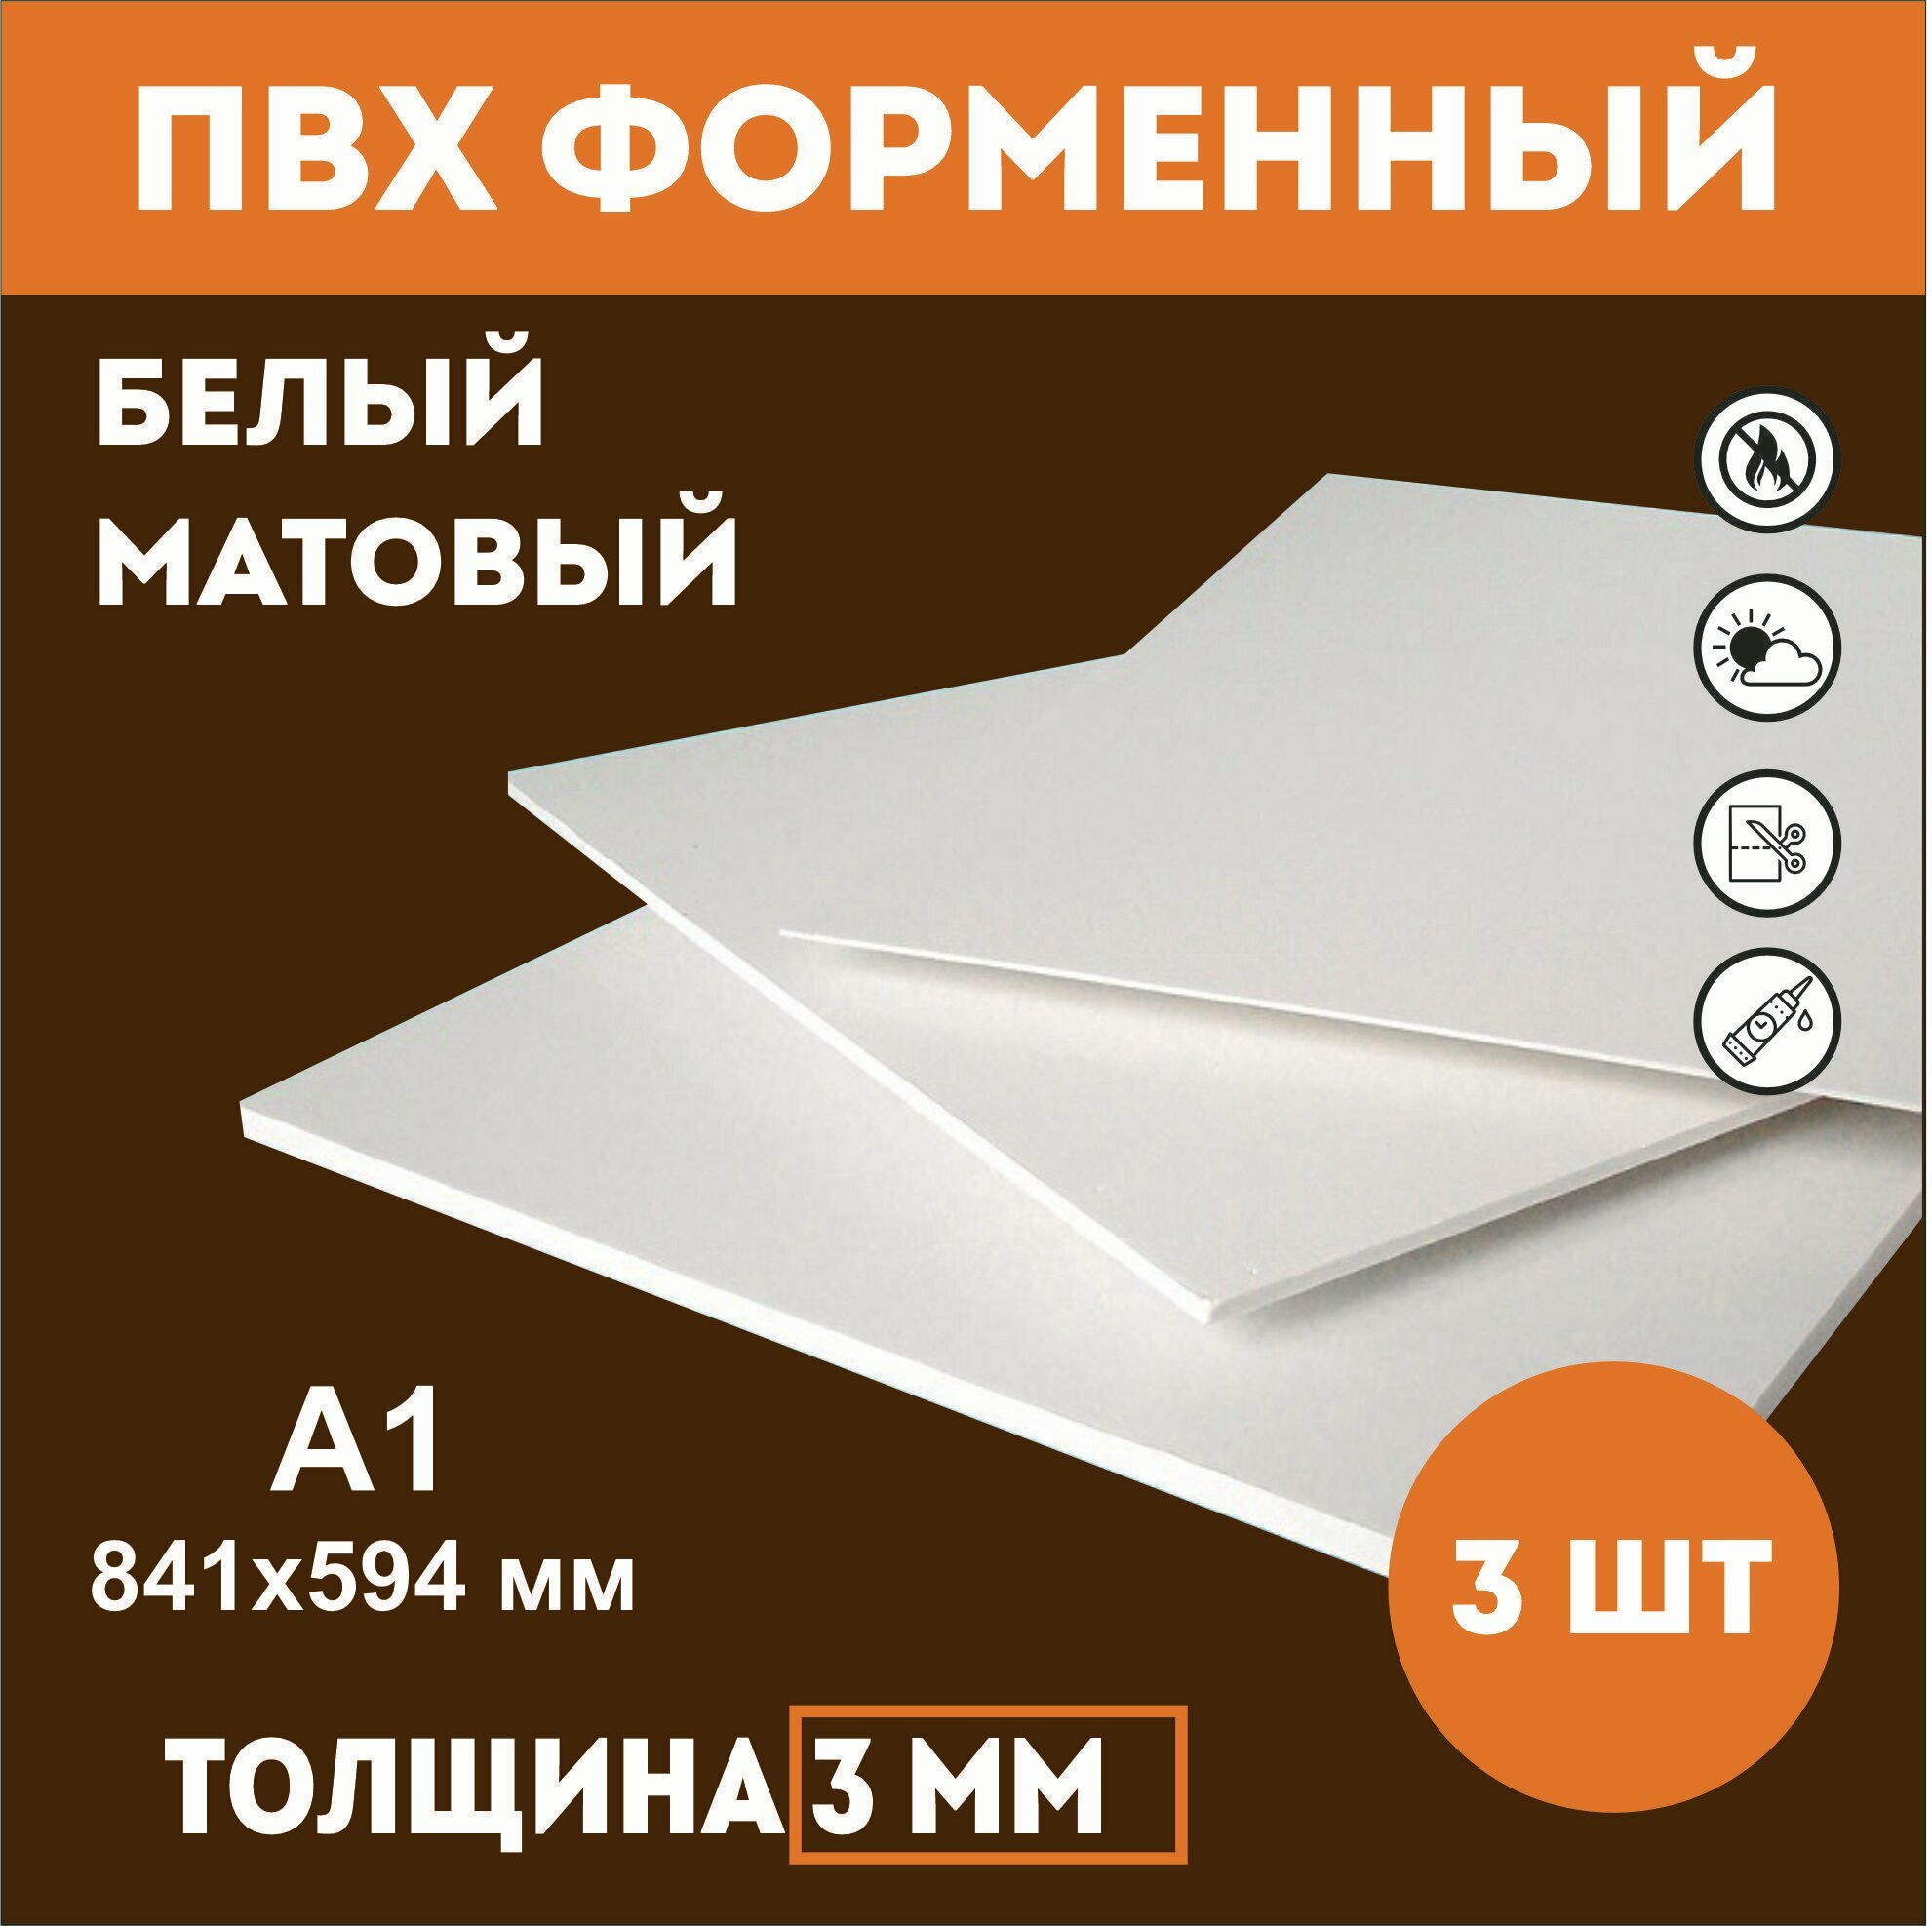 Заготовки для поделок из ПВХ пластика белого цвета 3 мм, А1 841мм-594мм 3 шт